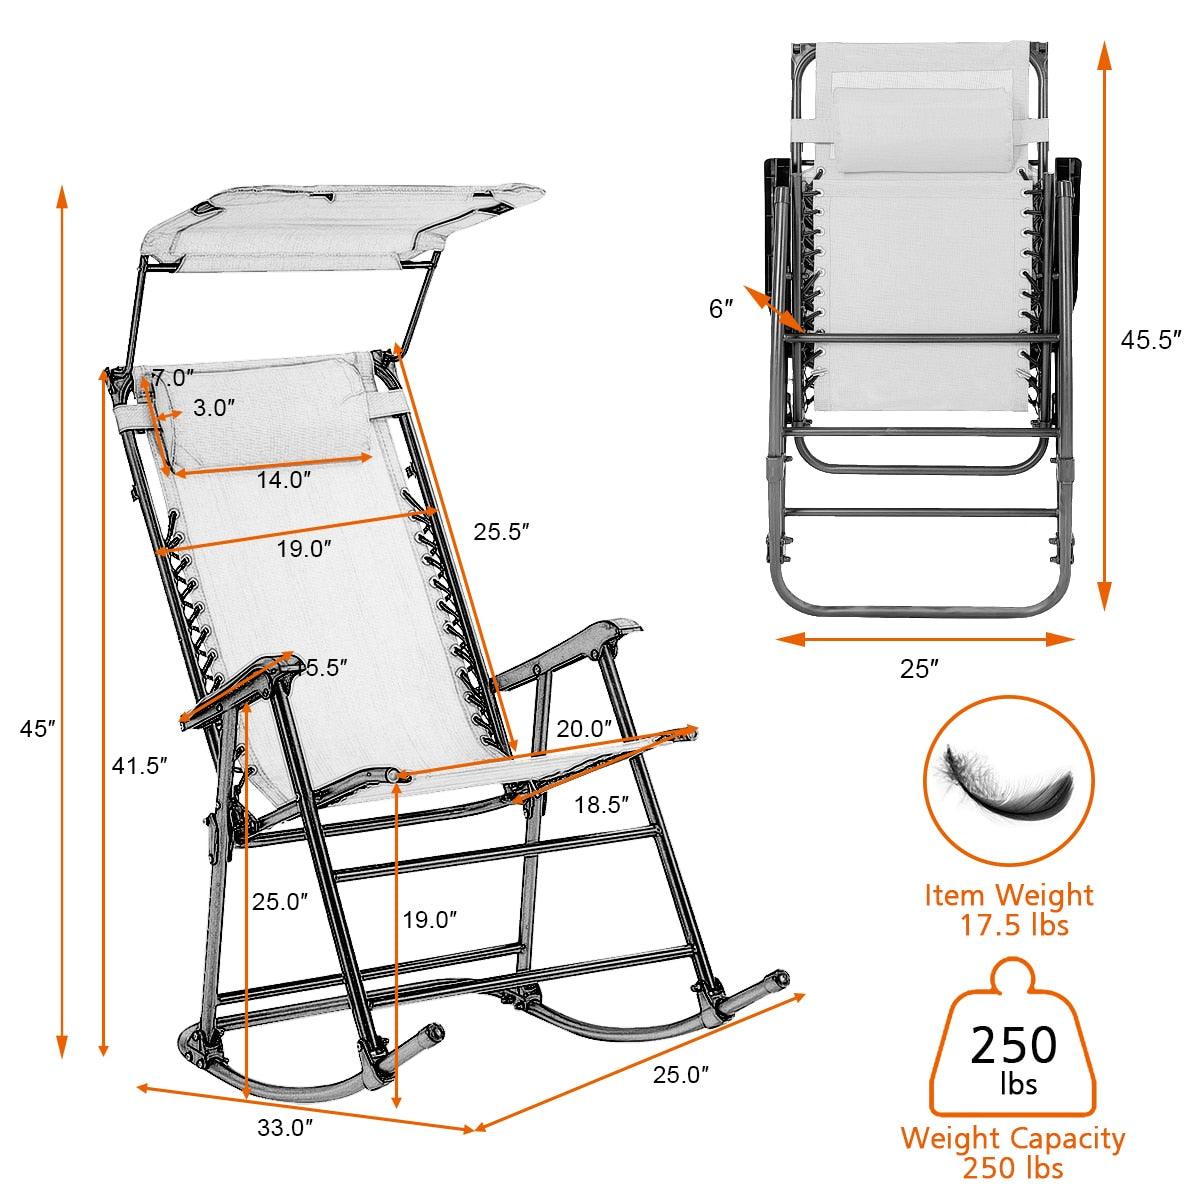 Folding Rocking Chair Rocker Porch Zero Gravity Furniture Sunshade Canopy Orange (FW2)(1U67)